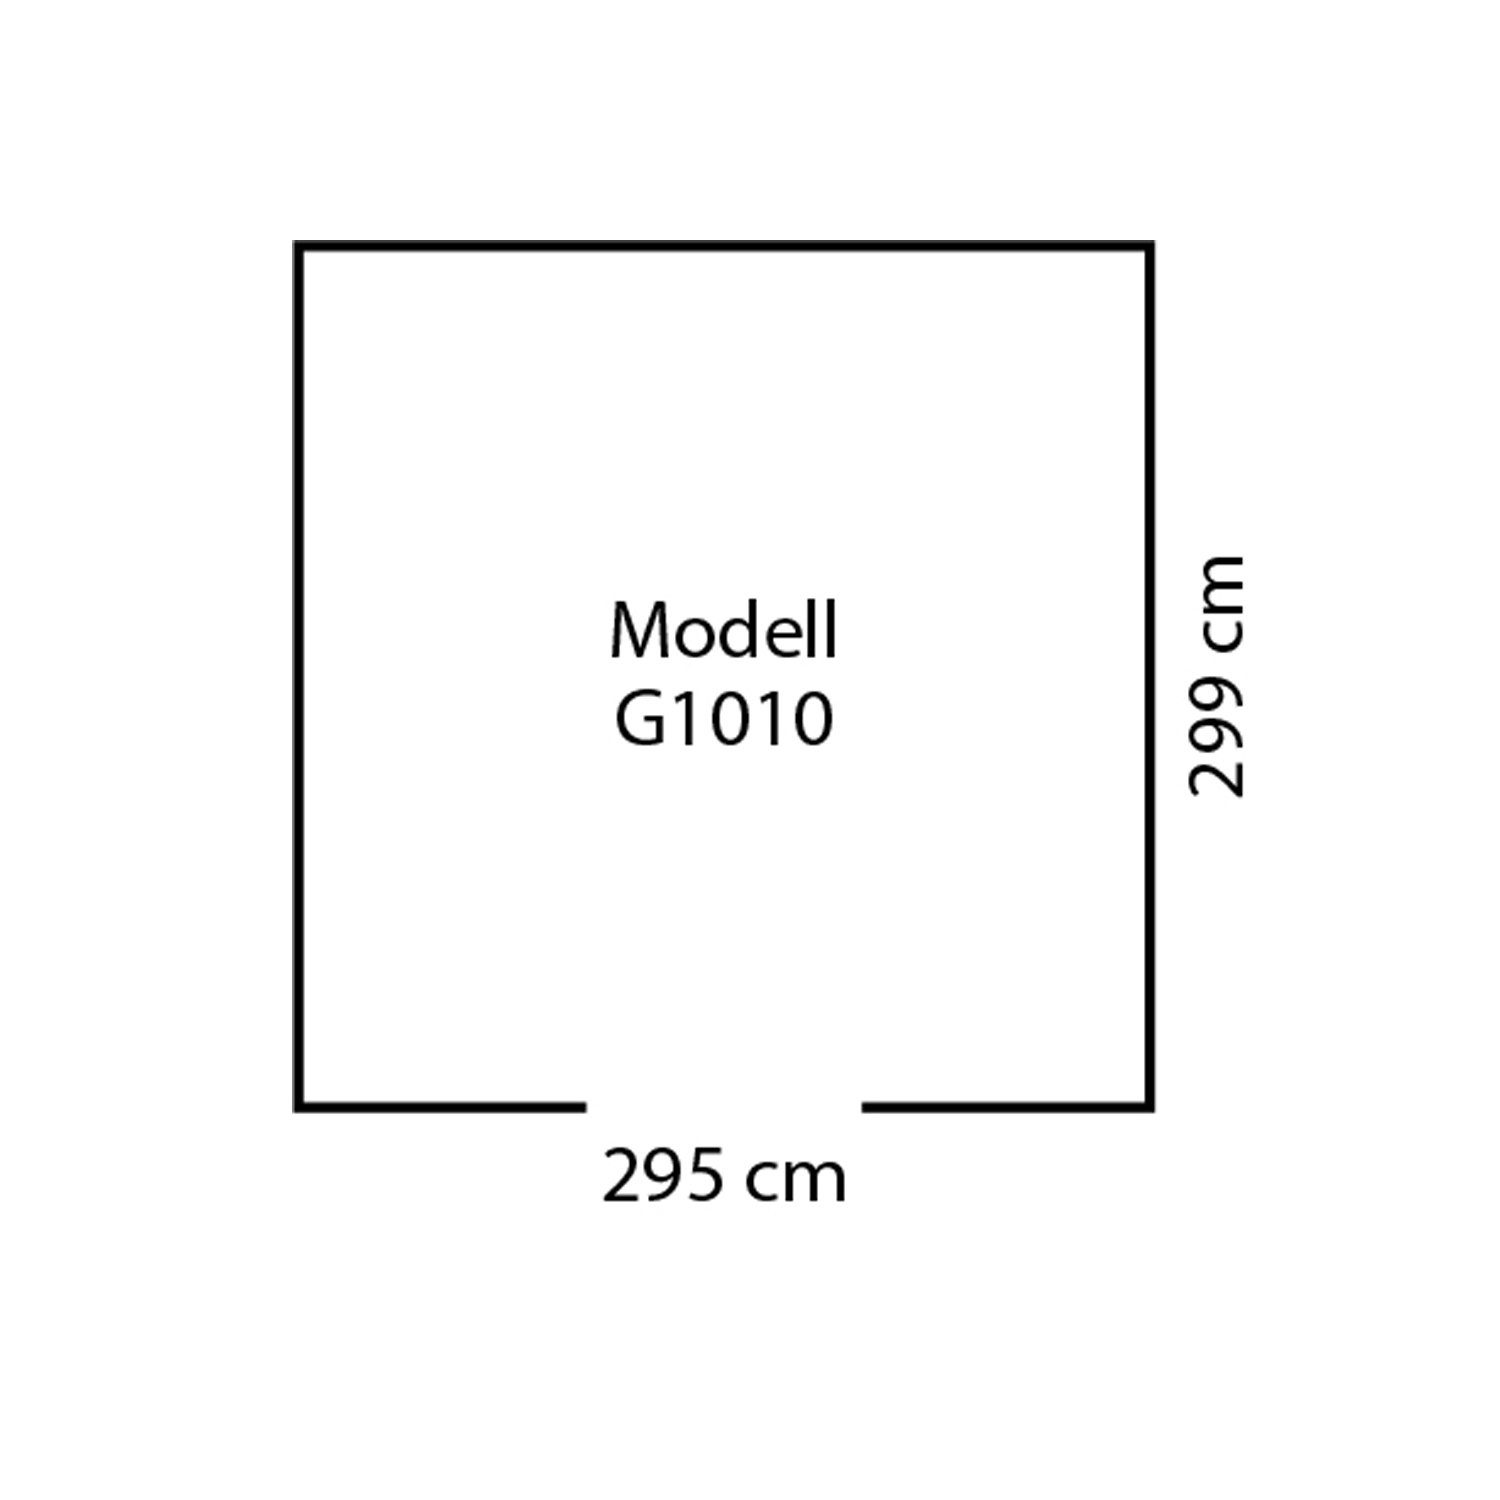 1010" Gerätehaus Mteall-Gartenmanager m) Globel "Dream jade / Industries (9,52